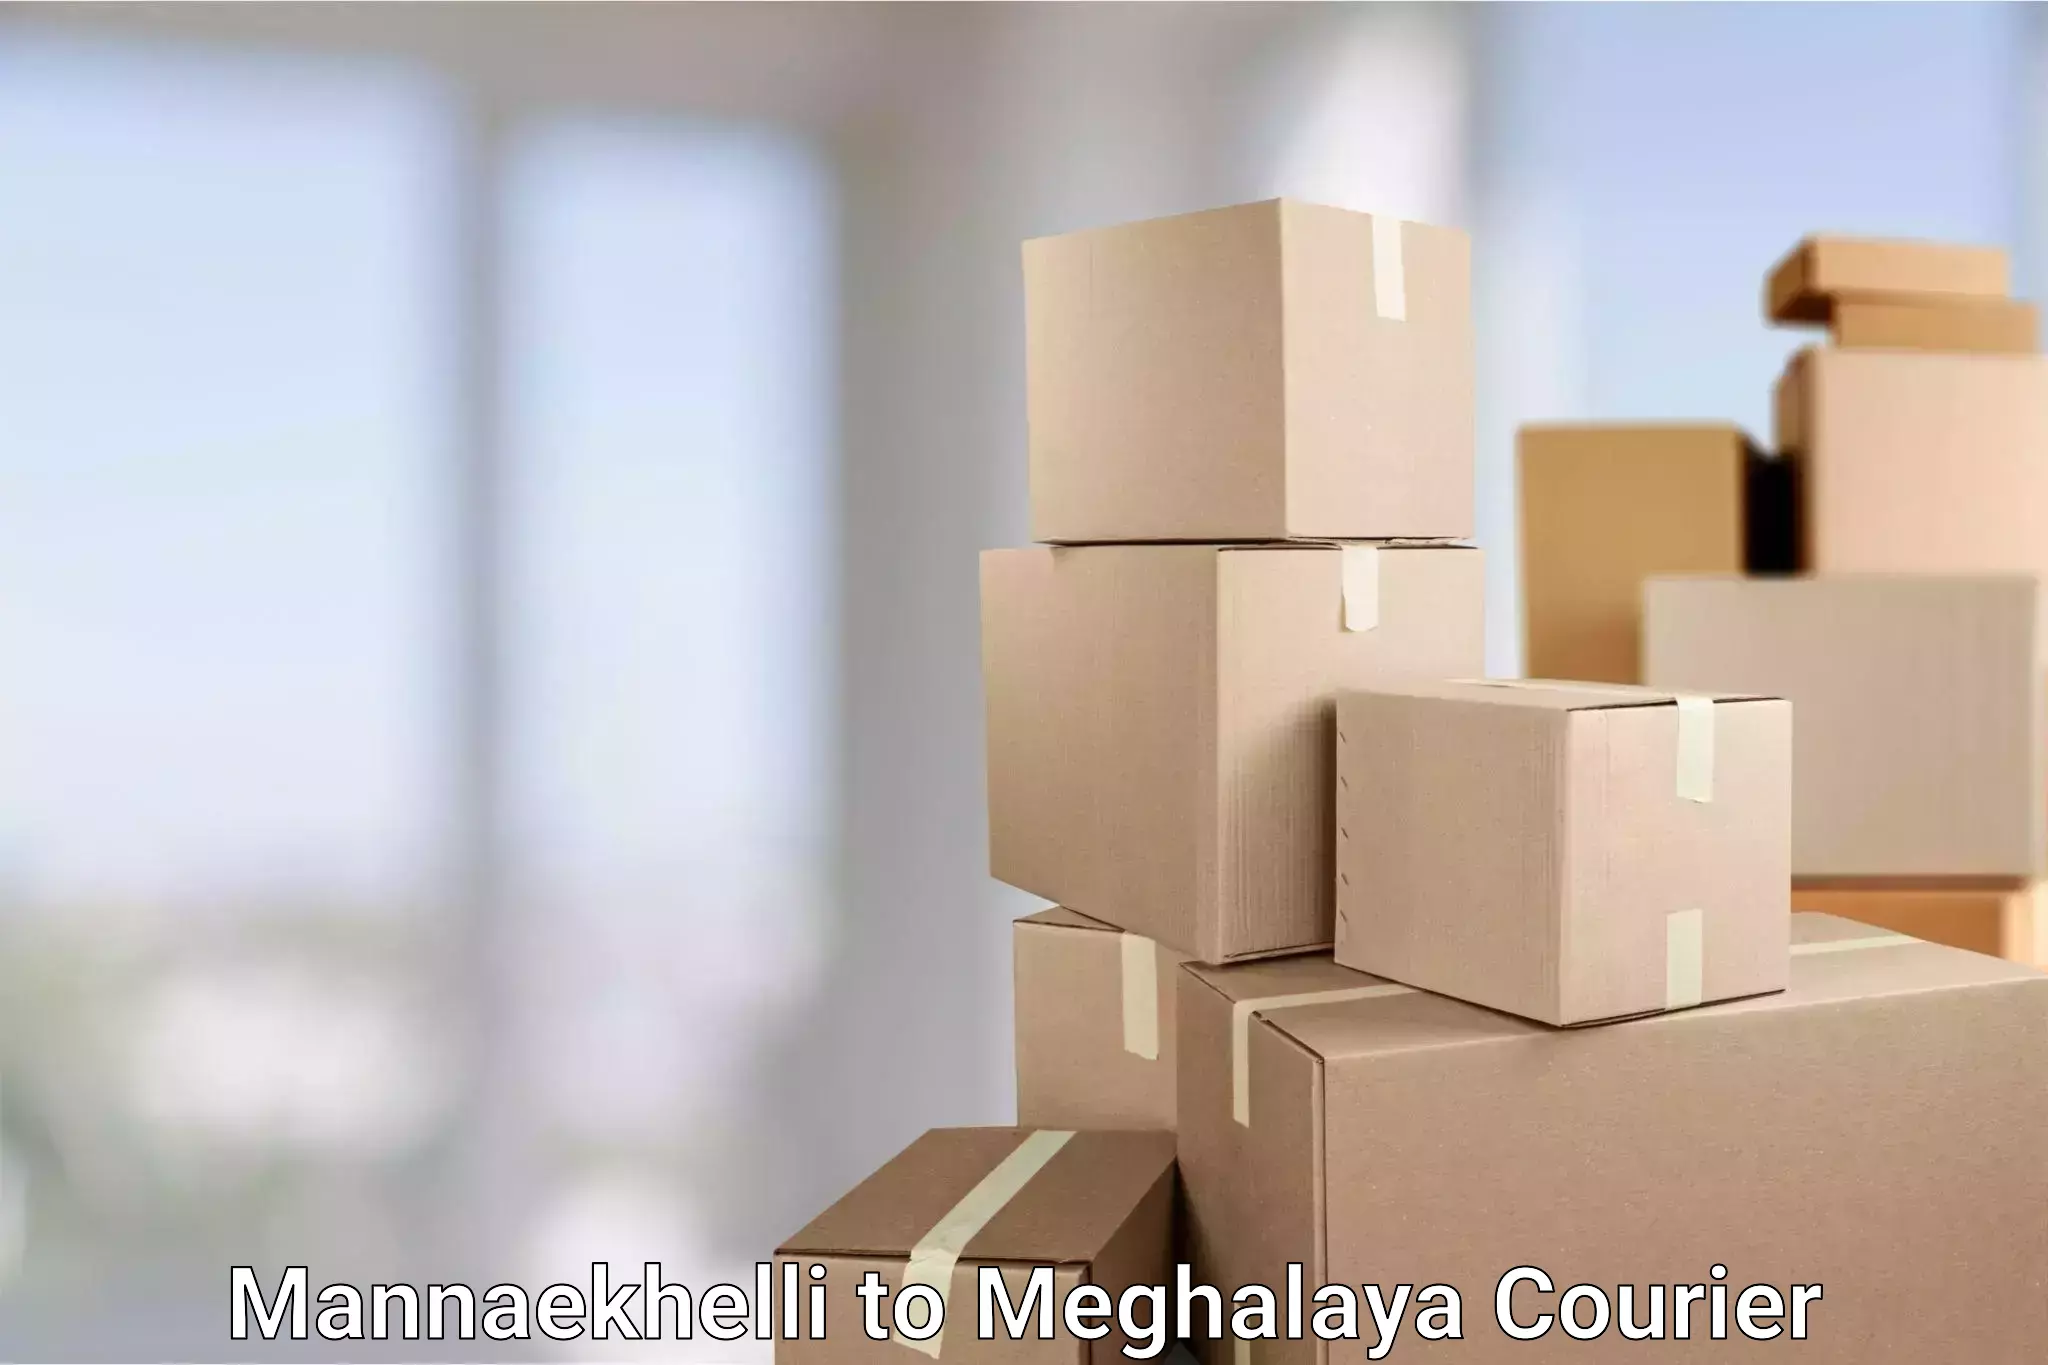 Efficient shipping platforms Mannaekhelli to Meghalaya